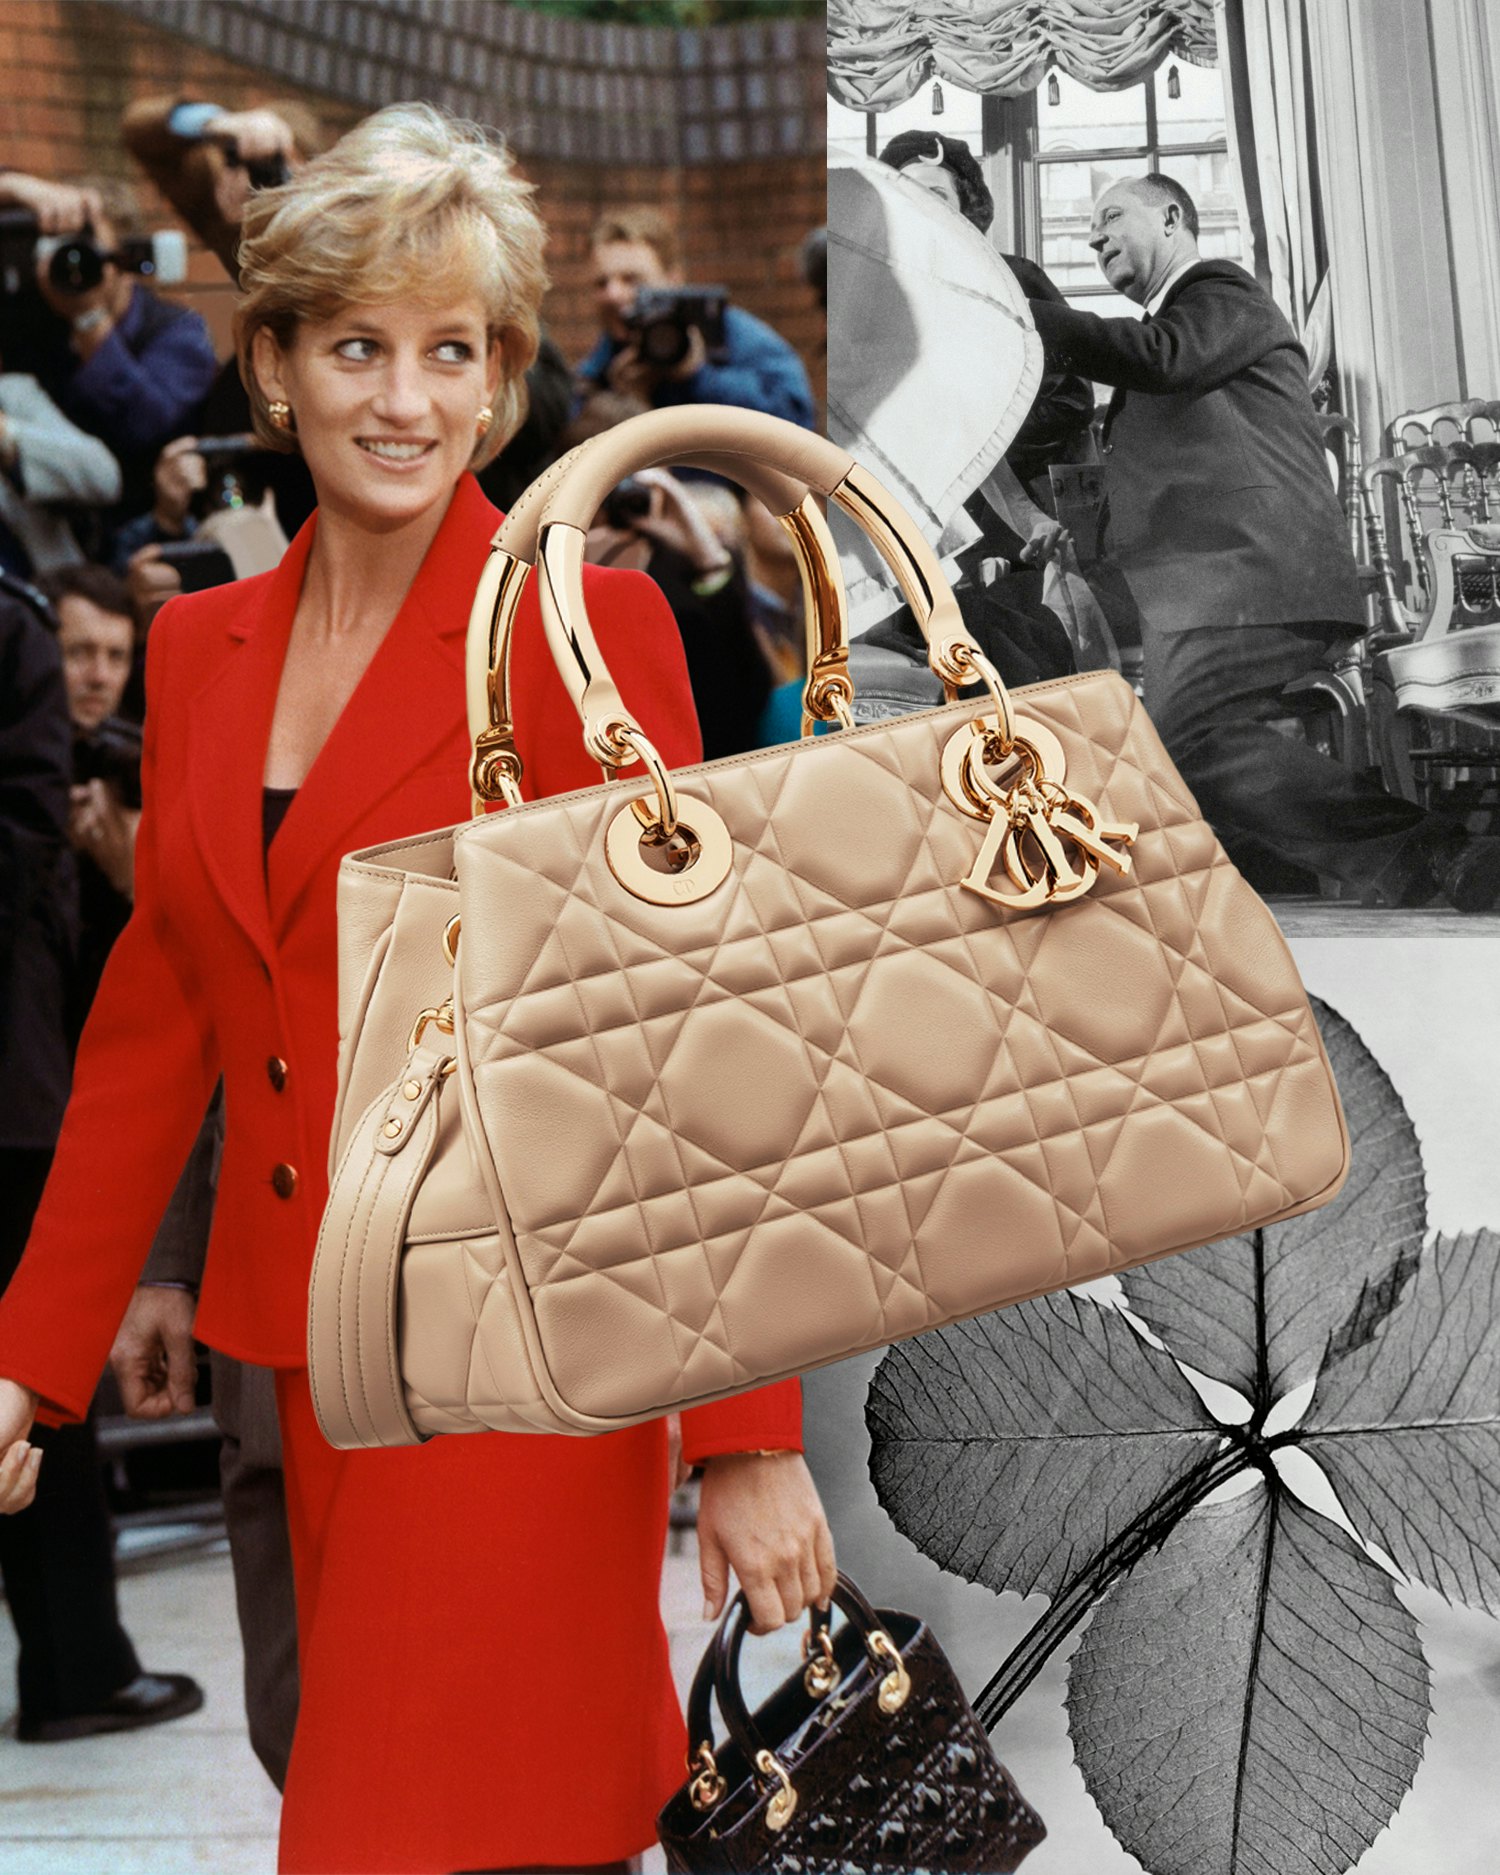 Dior is bringing back Princess Dianas iconic Lady Dior bag